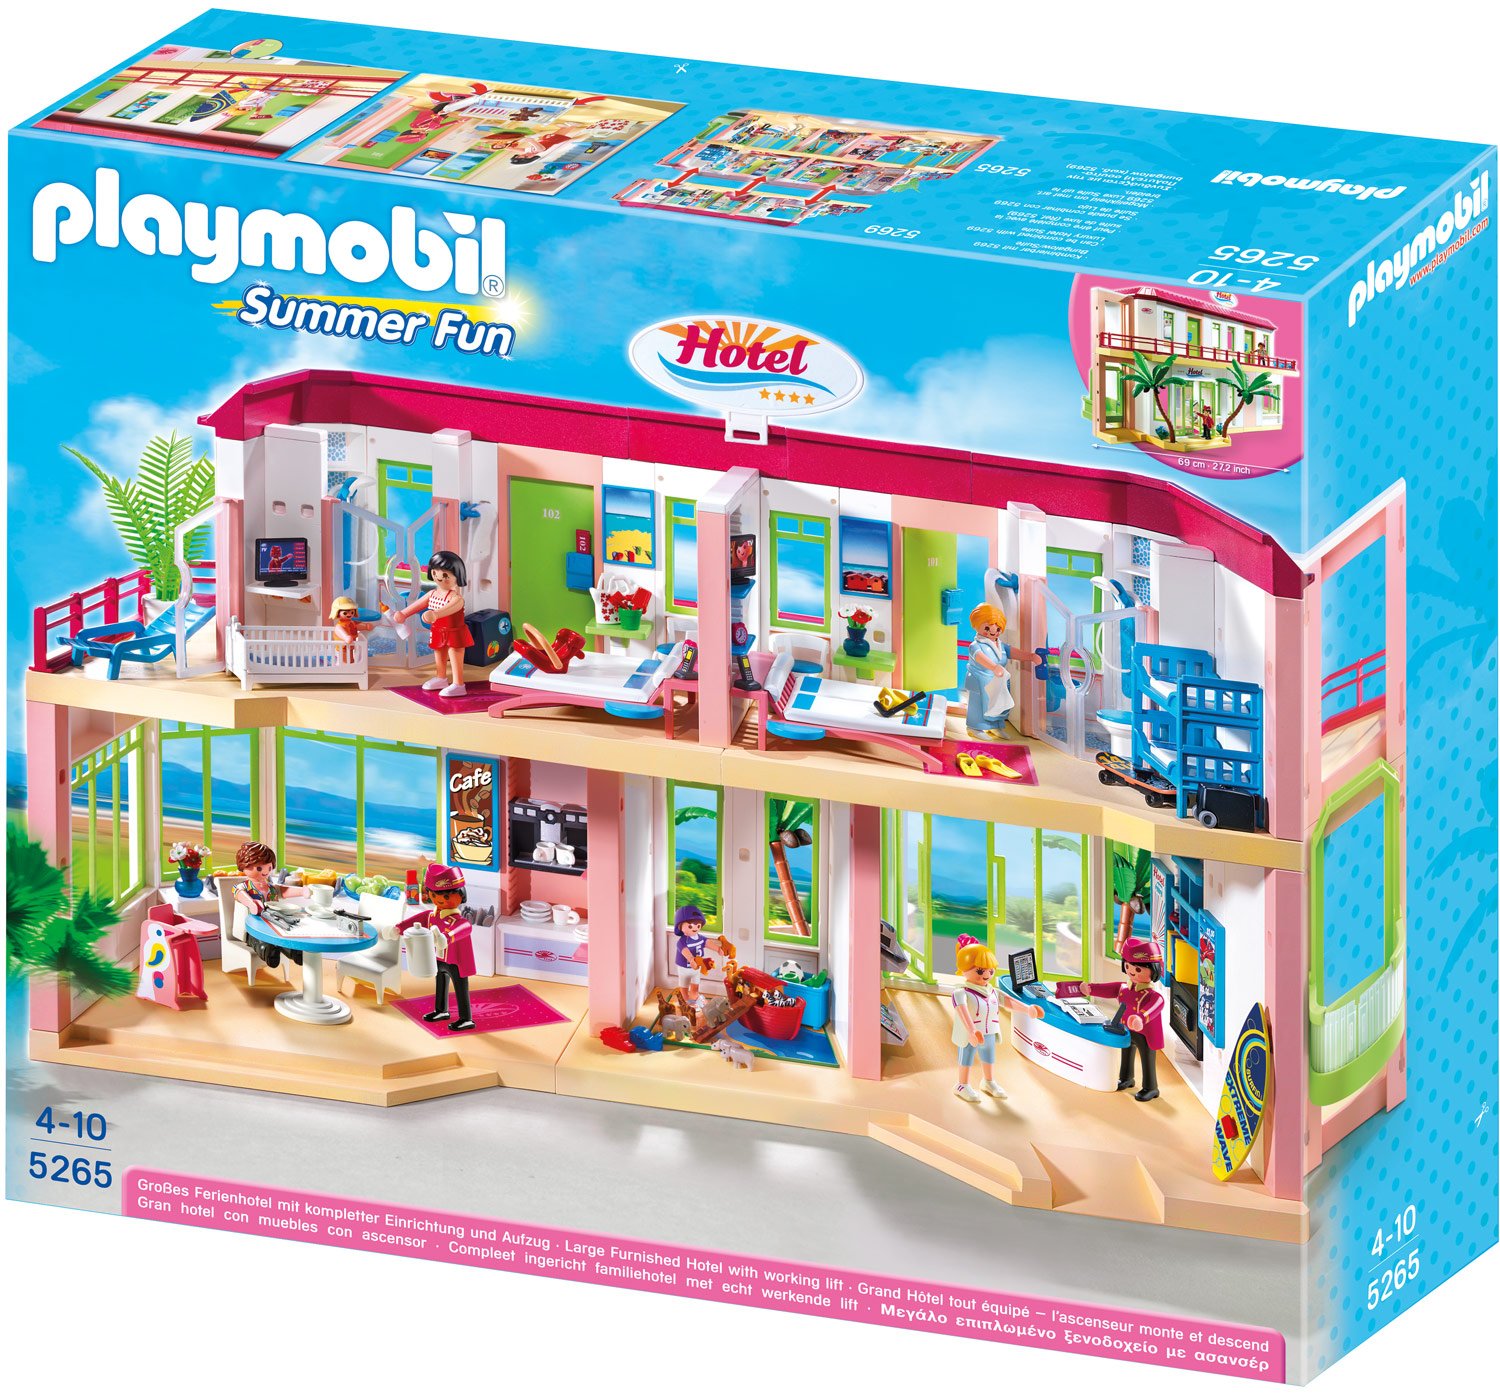 Playmobil Large Furnished Hotel